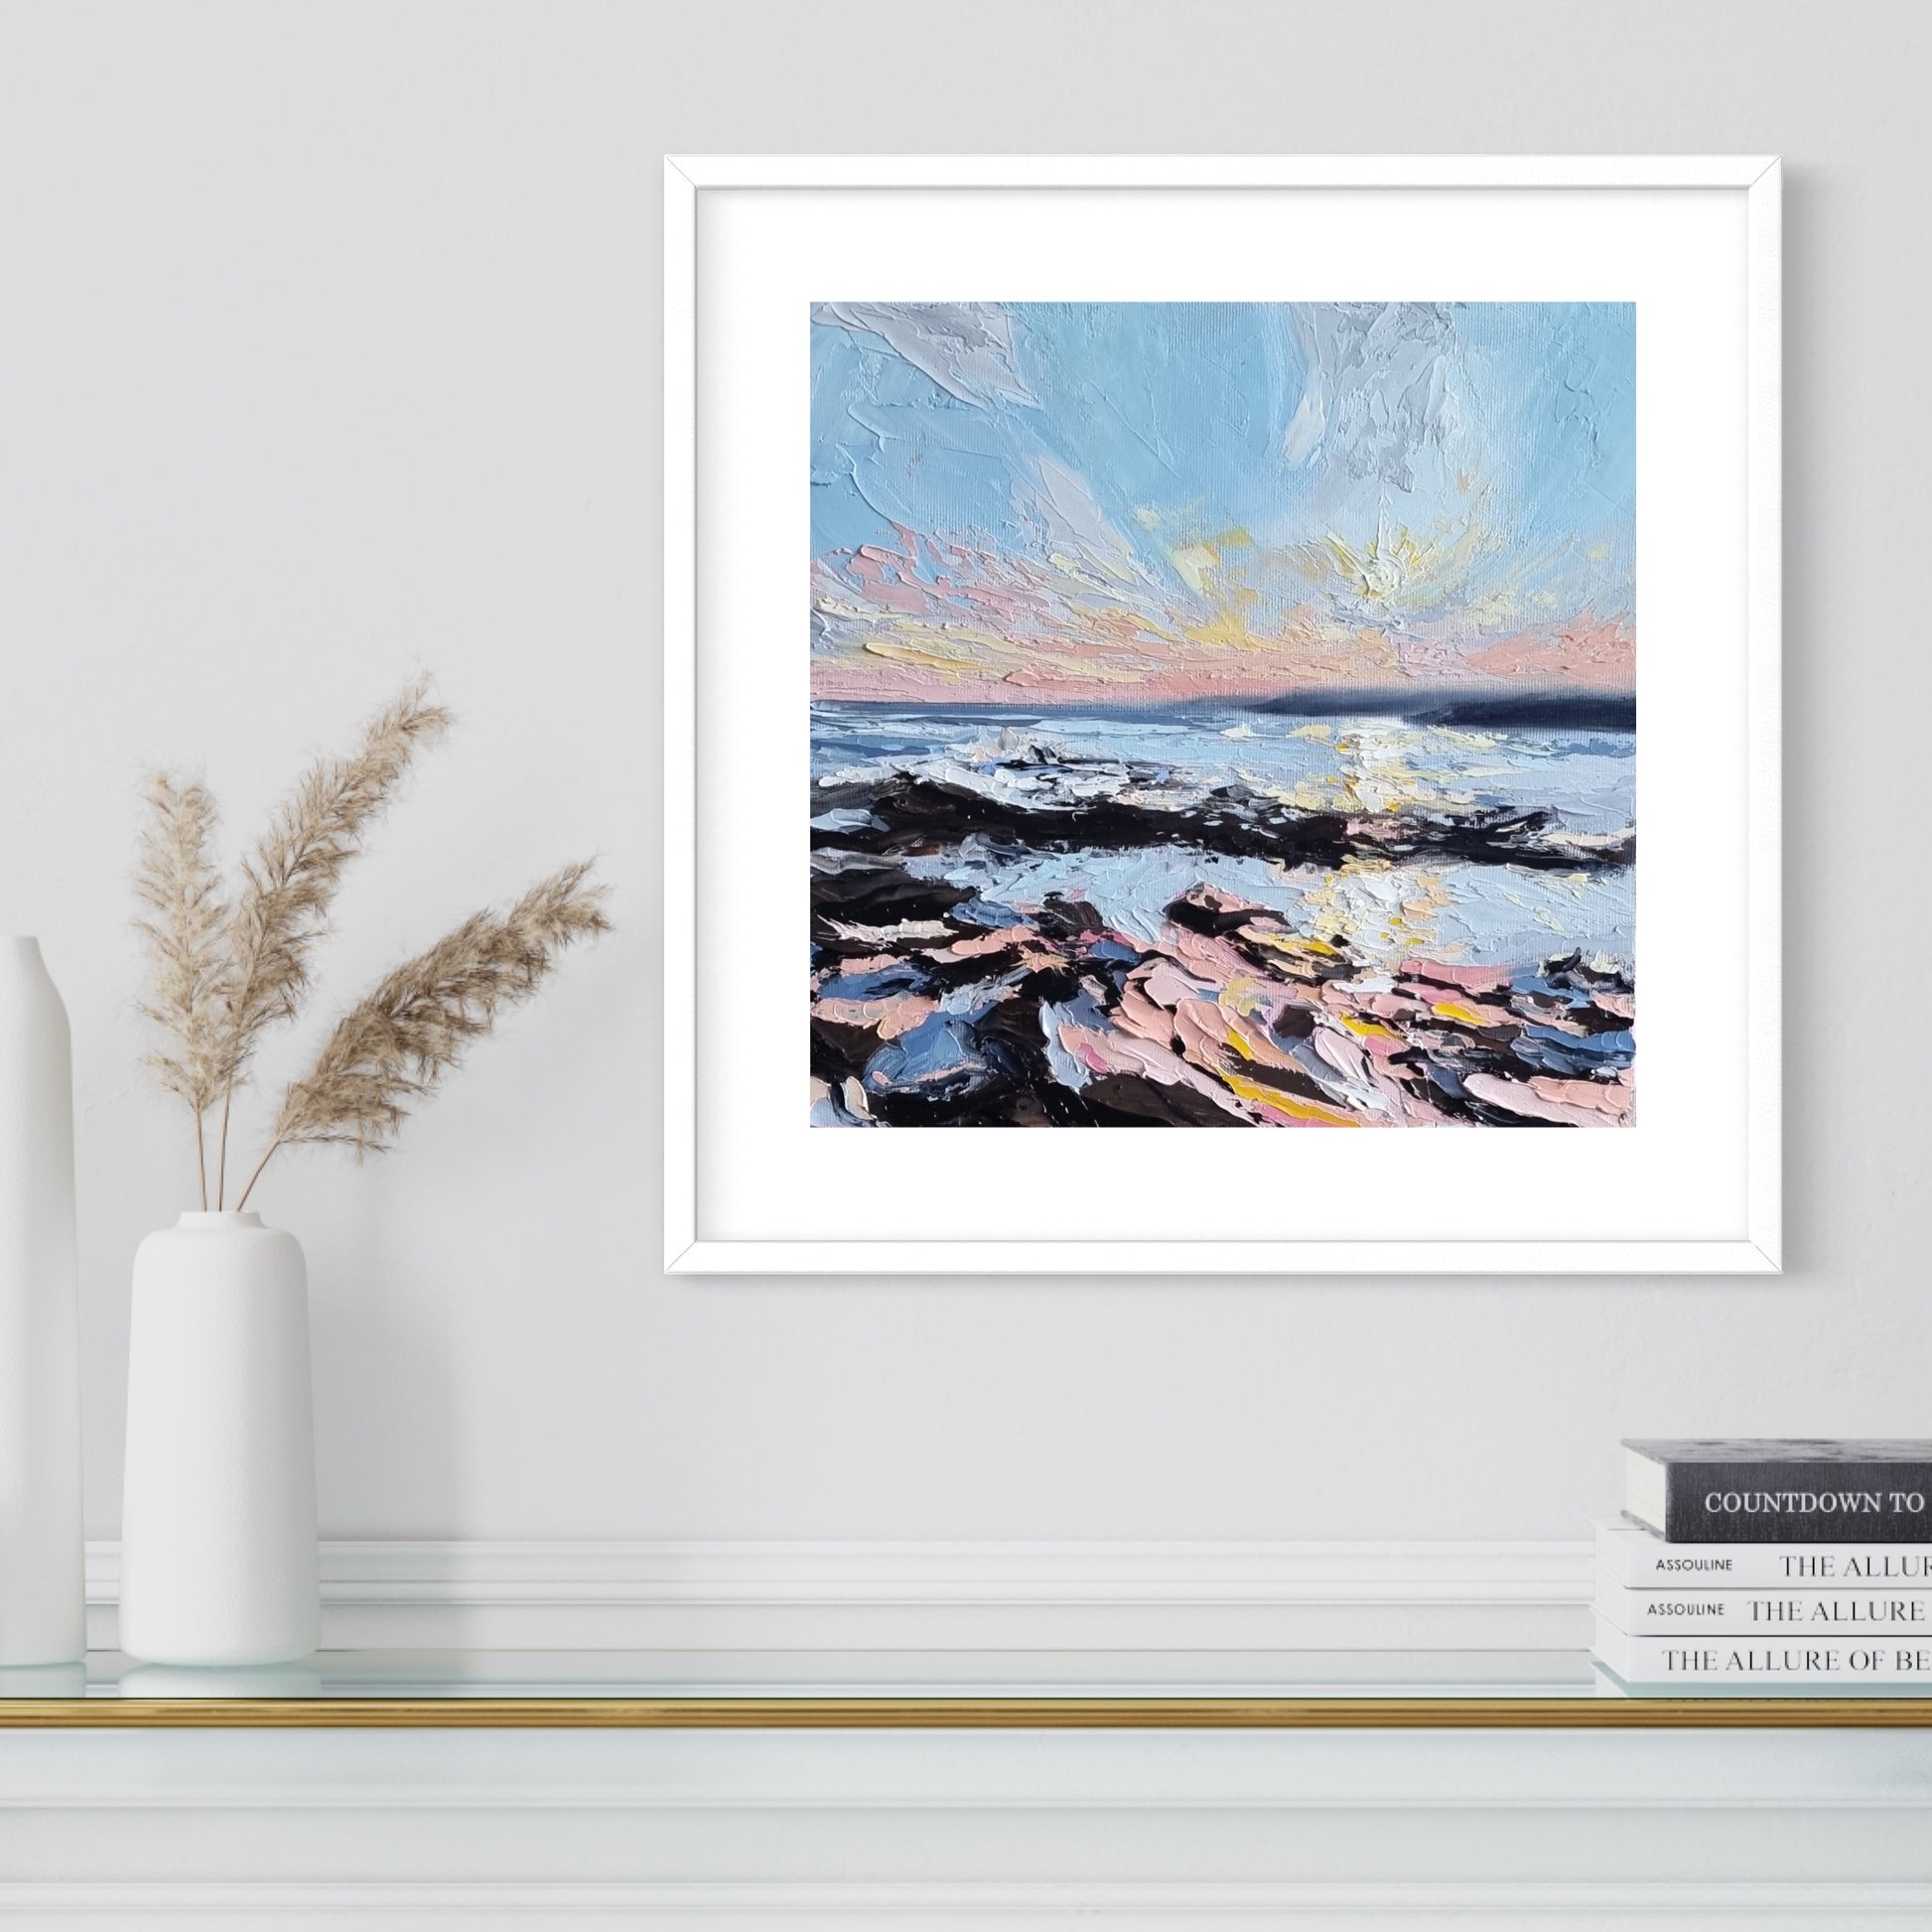 An original oil painting capturing the colours of a sunset sky along the Irish coast